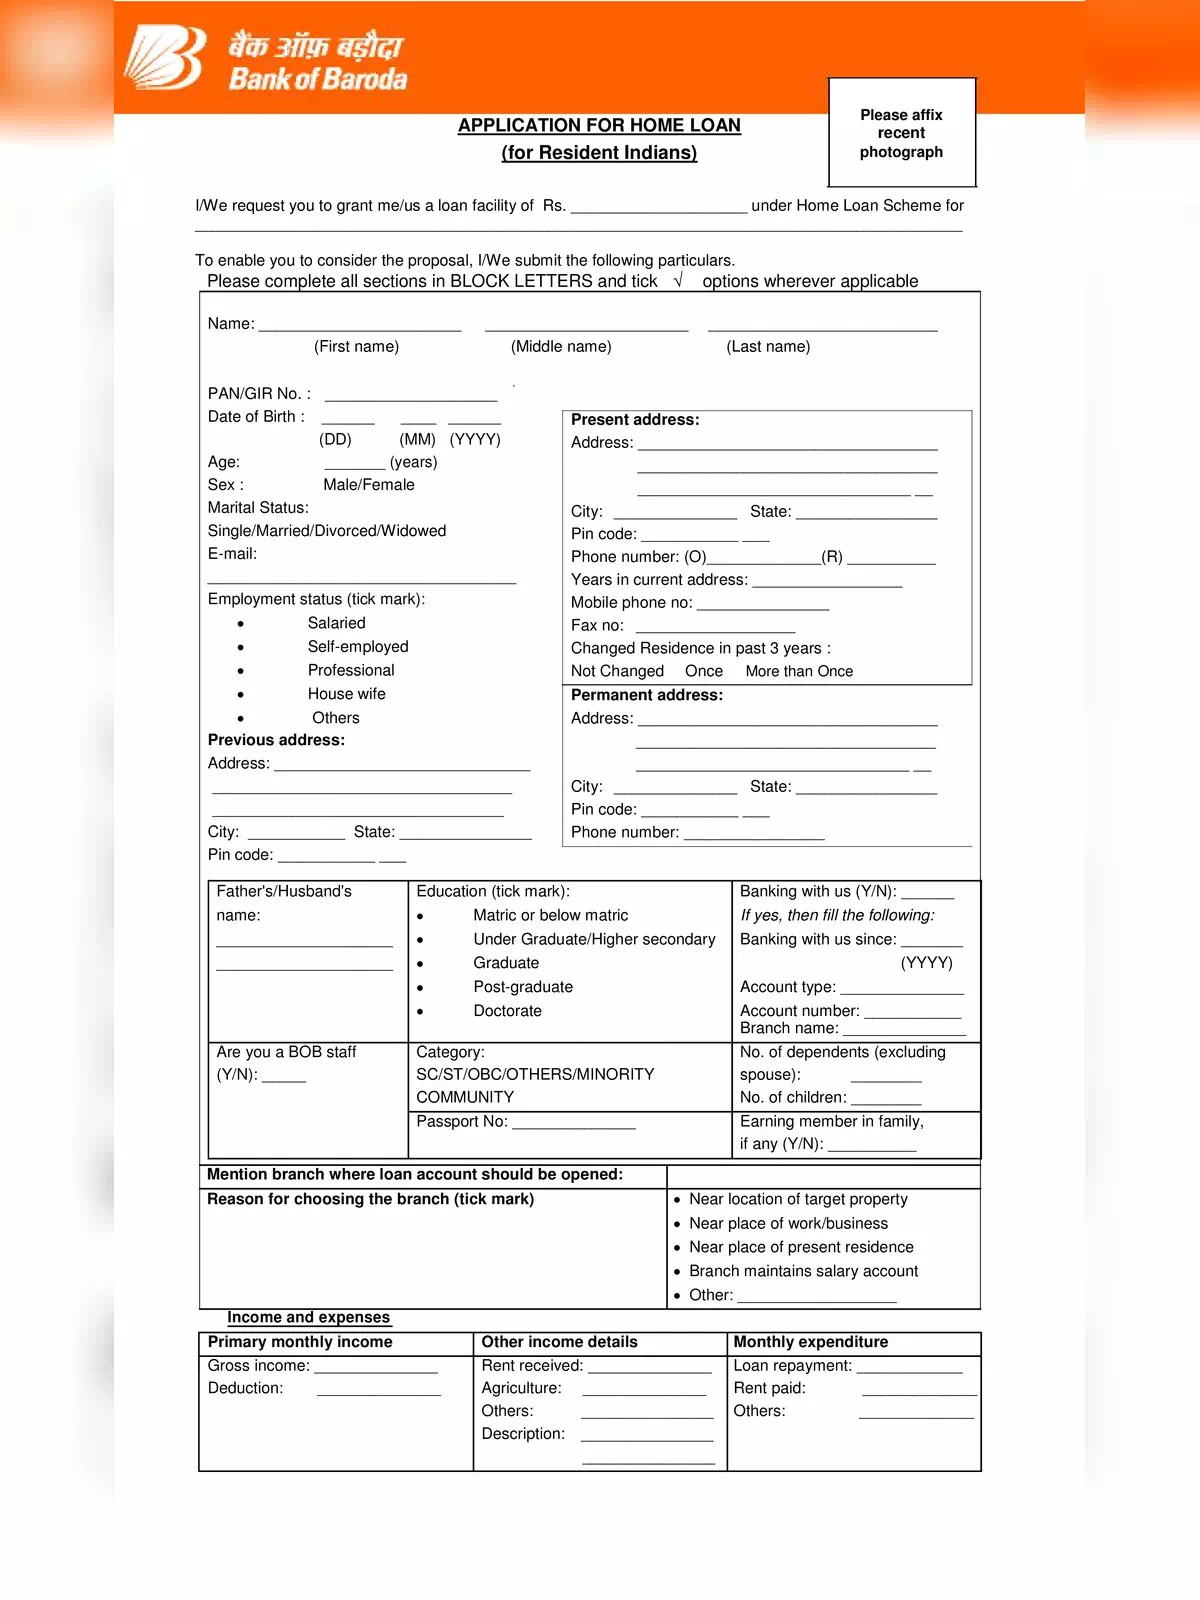 Bank of Baroda Home Loan Application Form